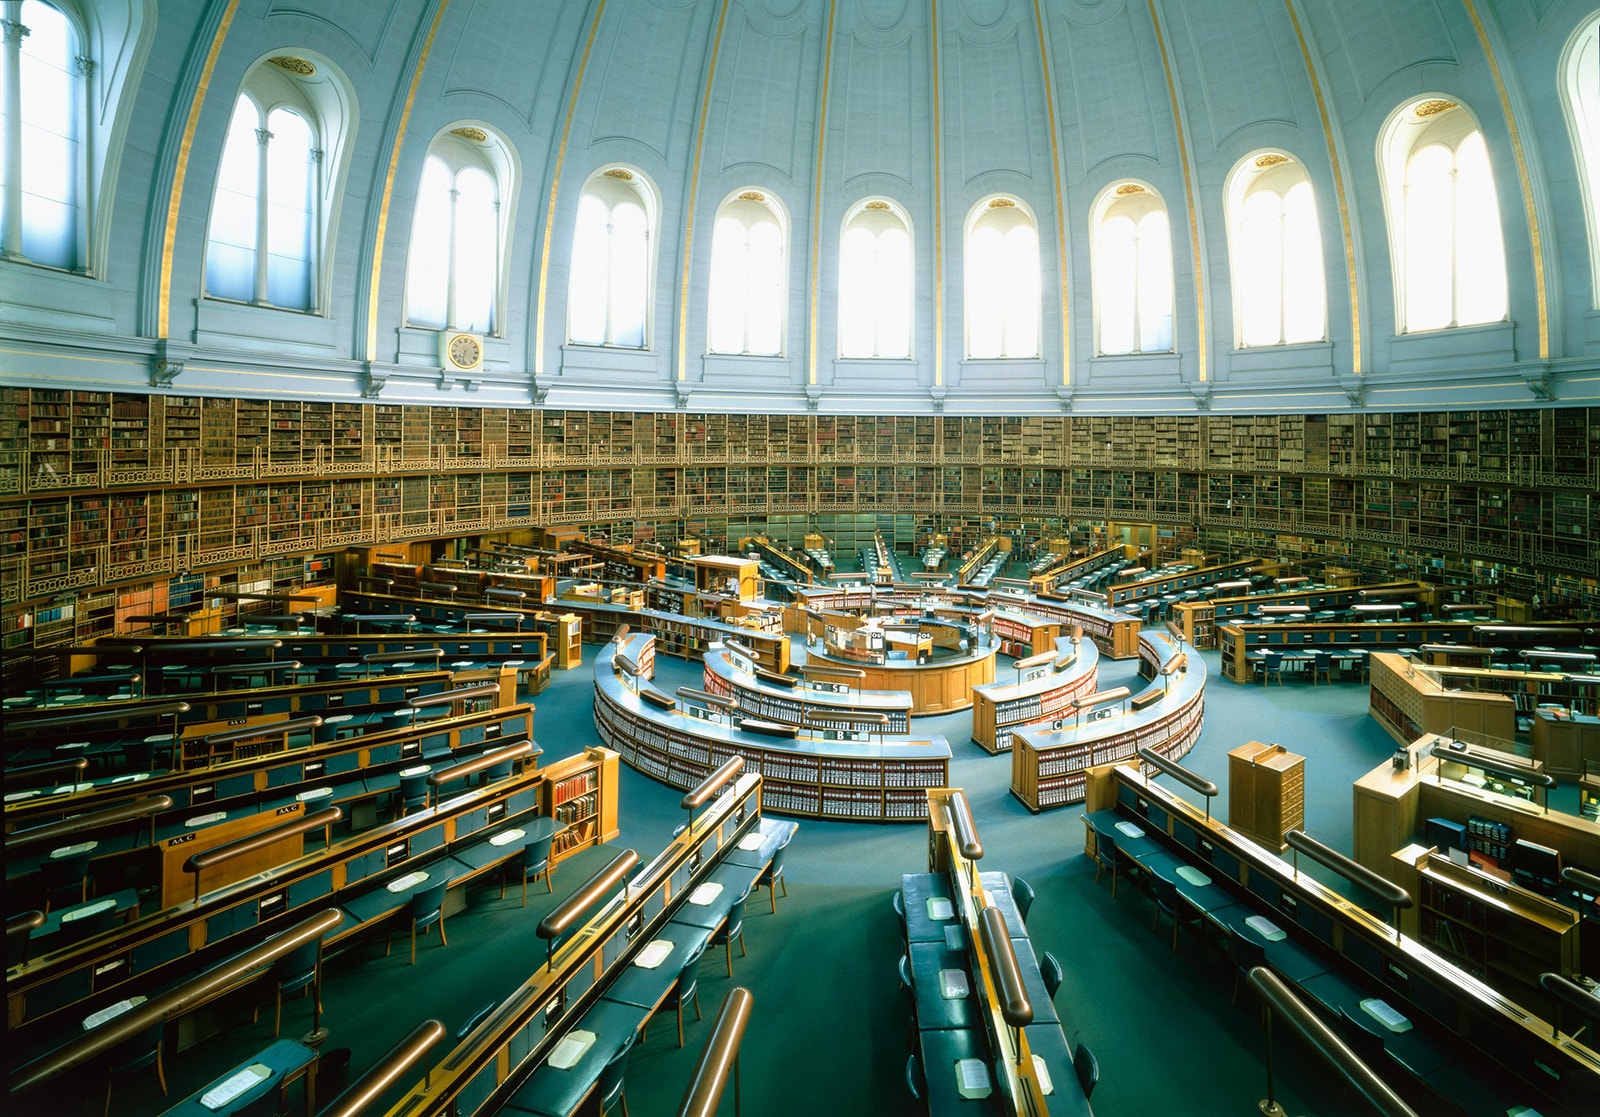 british library tour